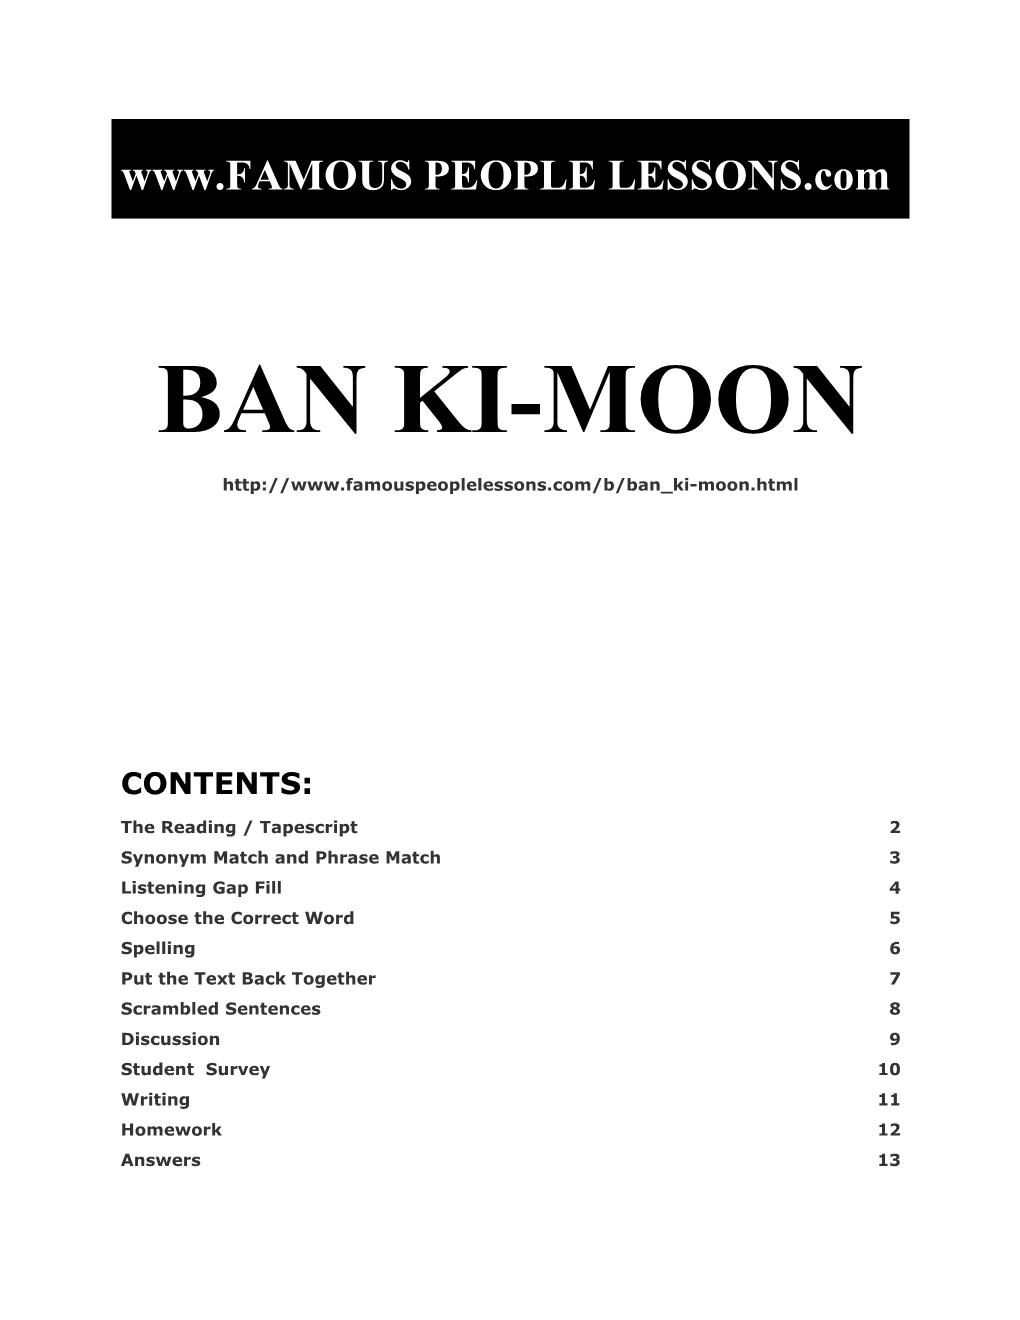 Famous People Lessons - Ban Ki-Moon